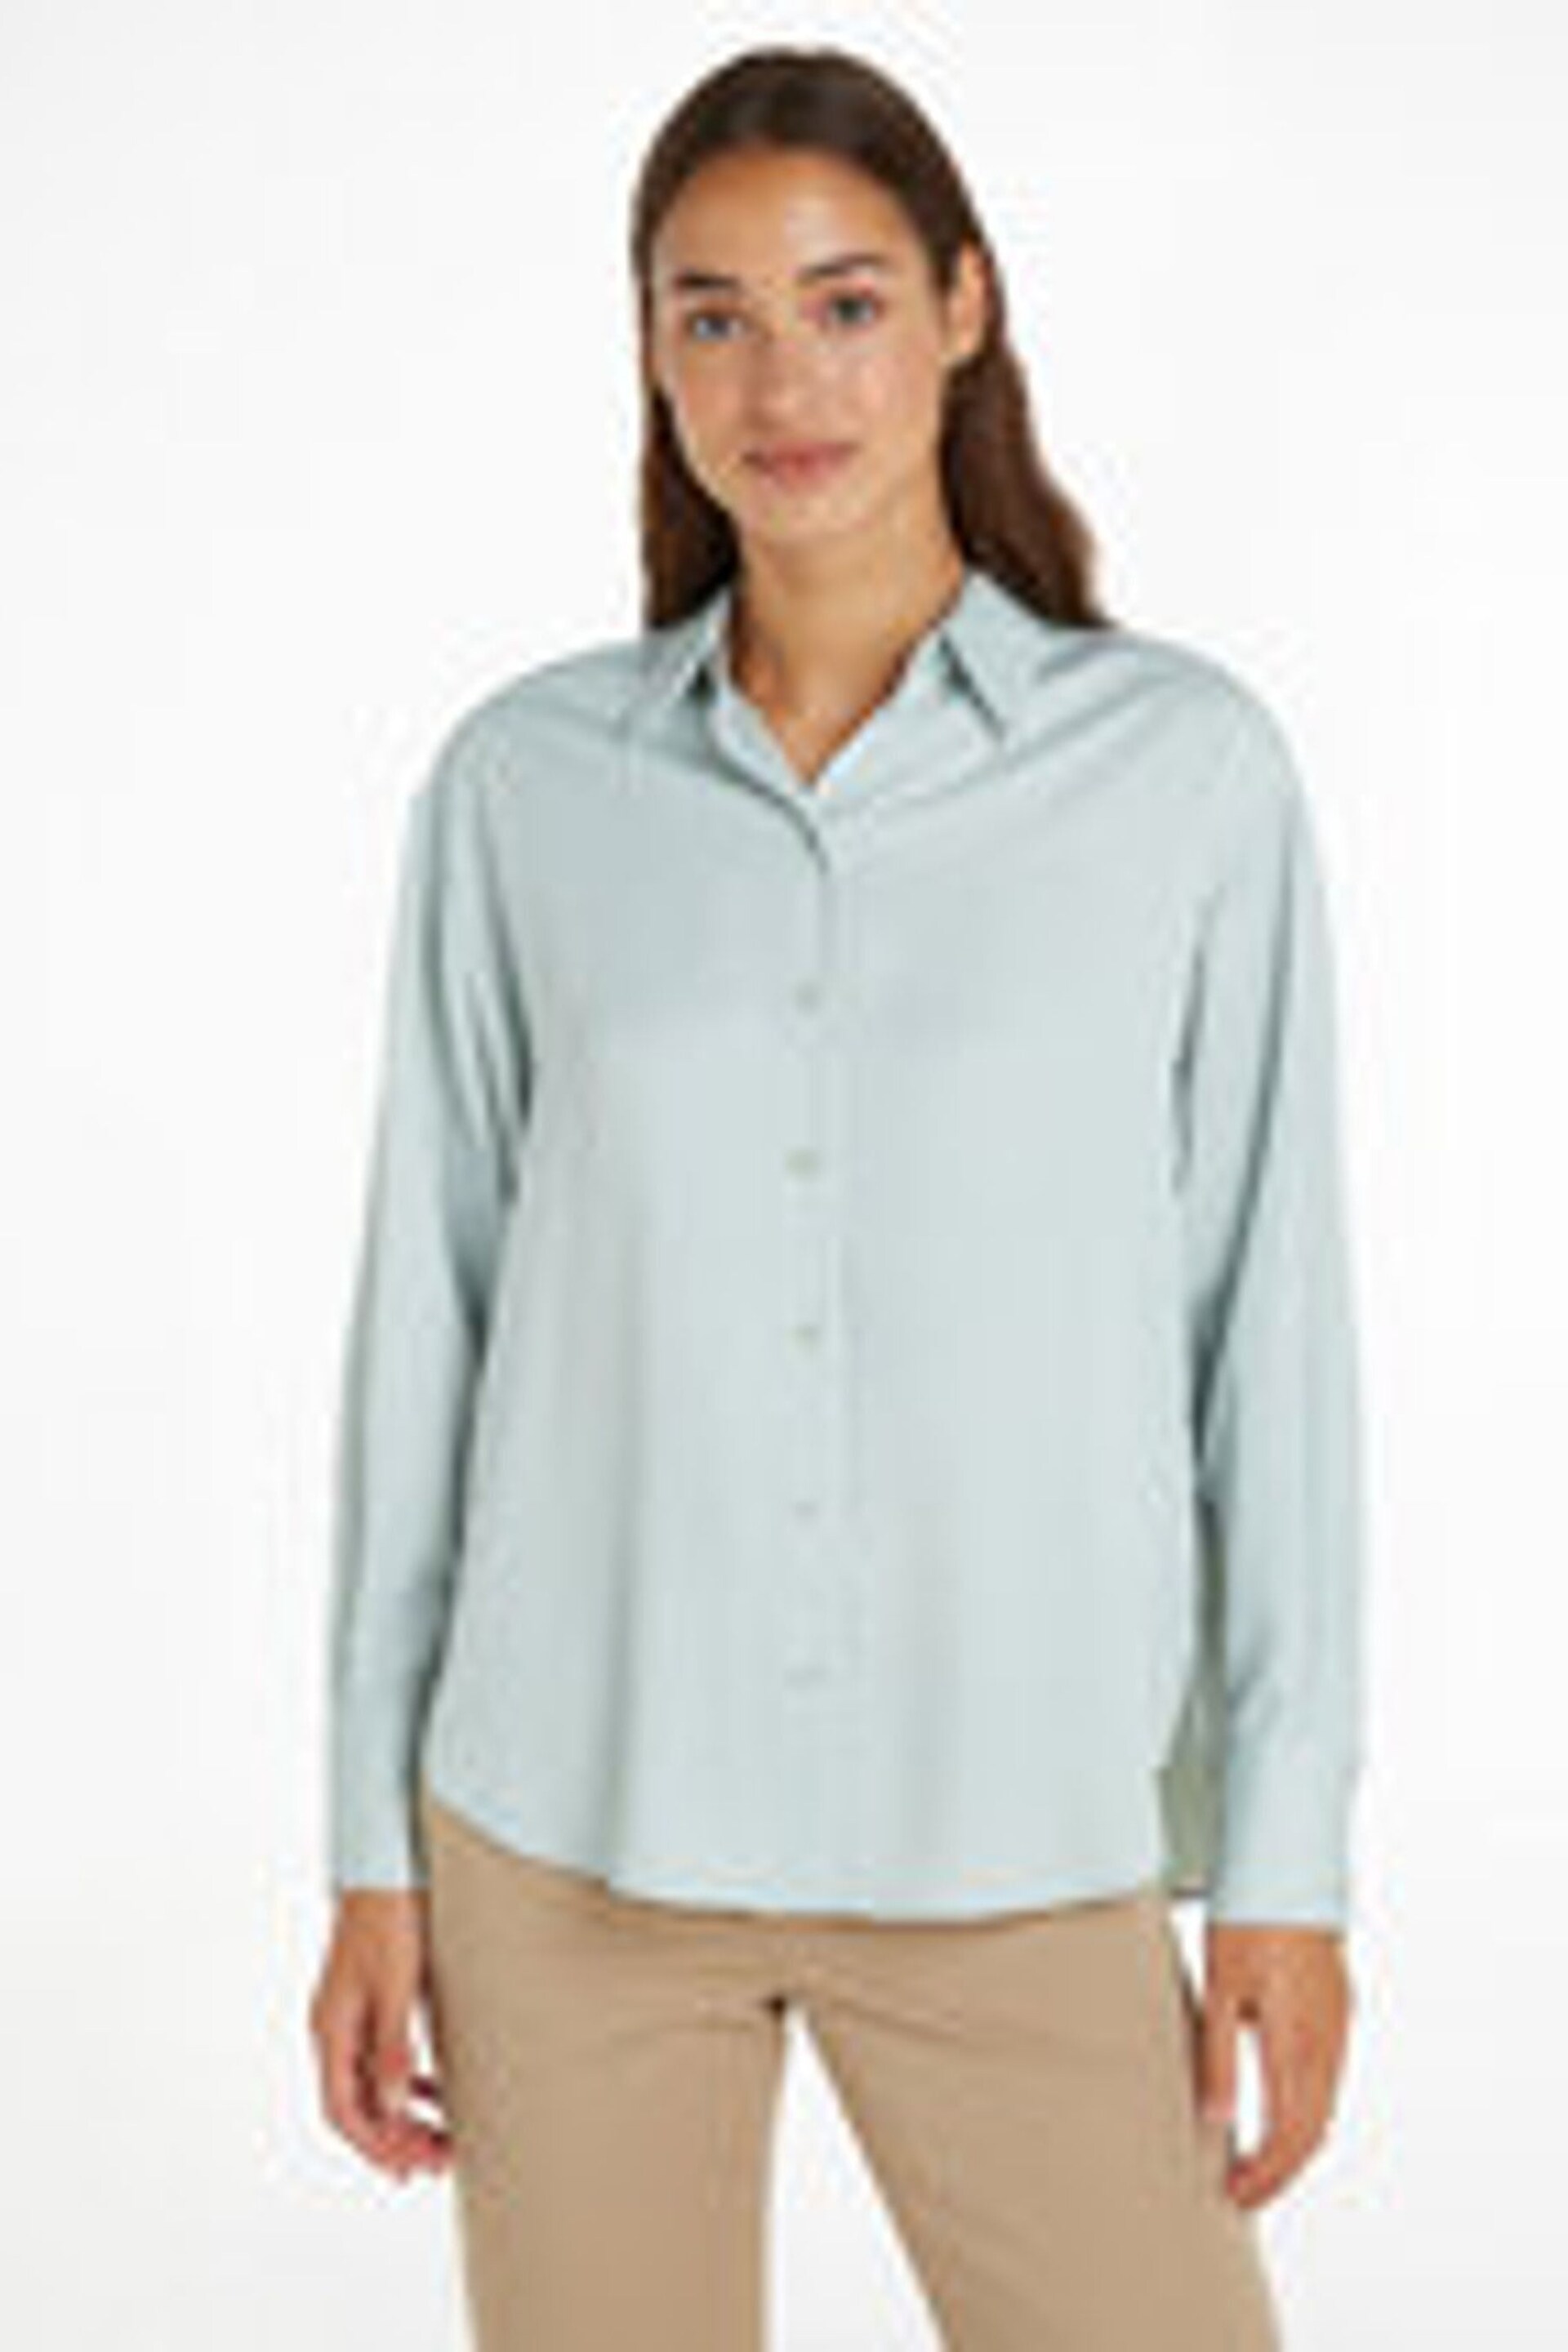 Calvin Klein Grey Relaxed Shirt - Image 1 of 6